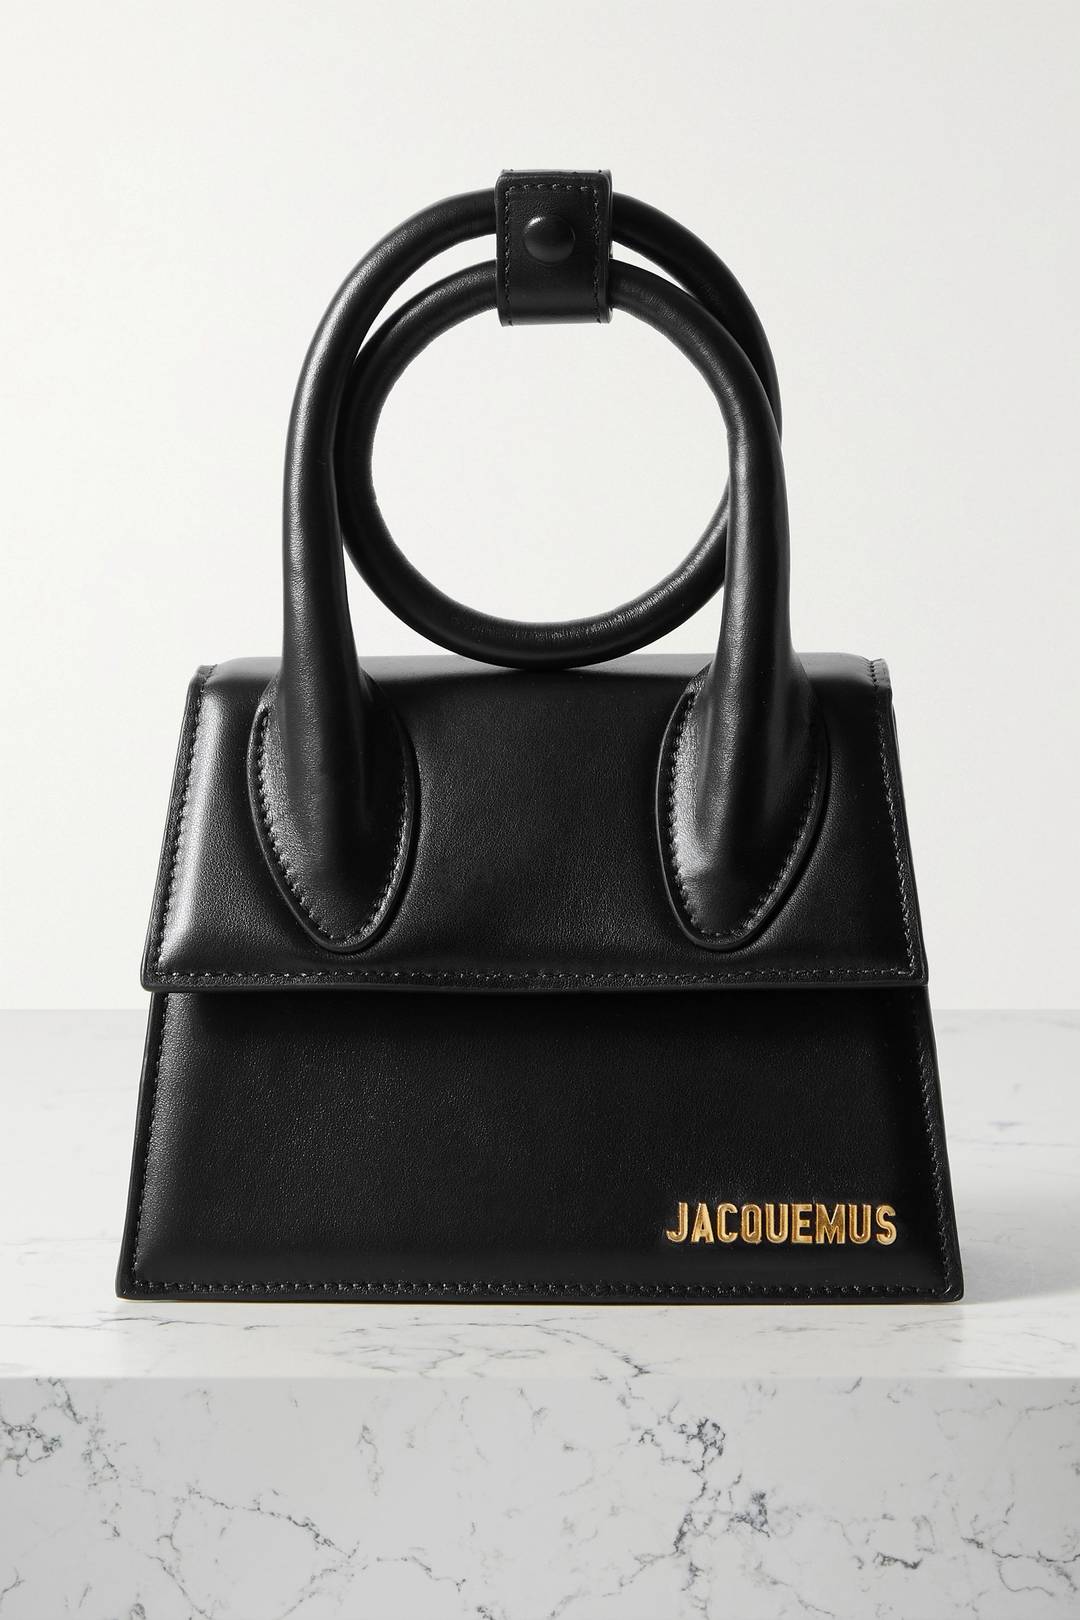 5 colors for handbag 1. Black